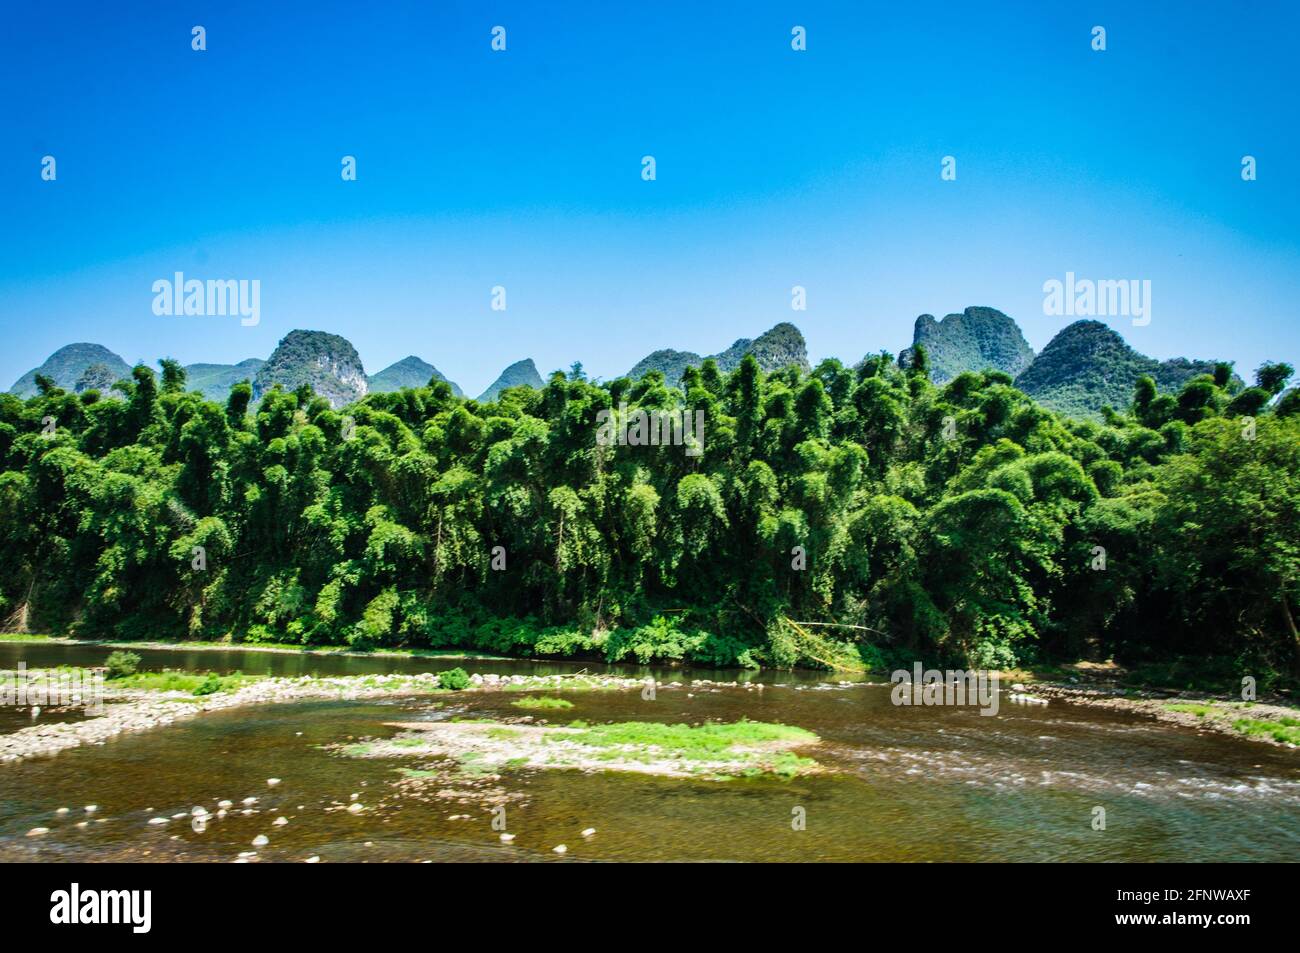 The Li river scenery in summer Stock Photo